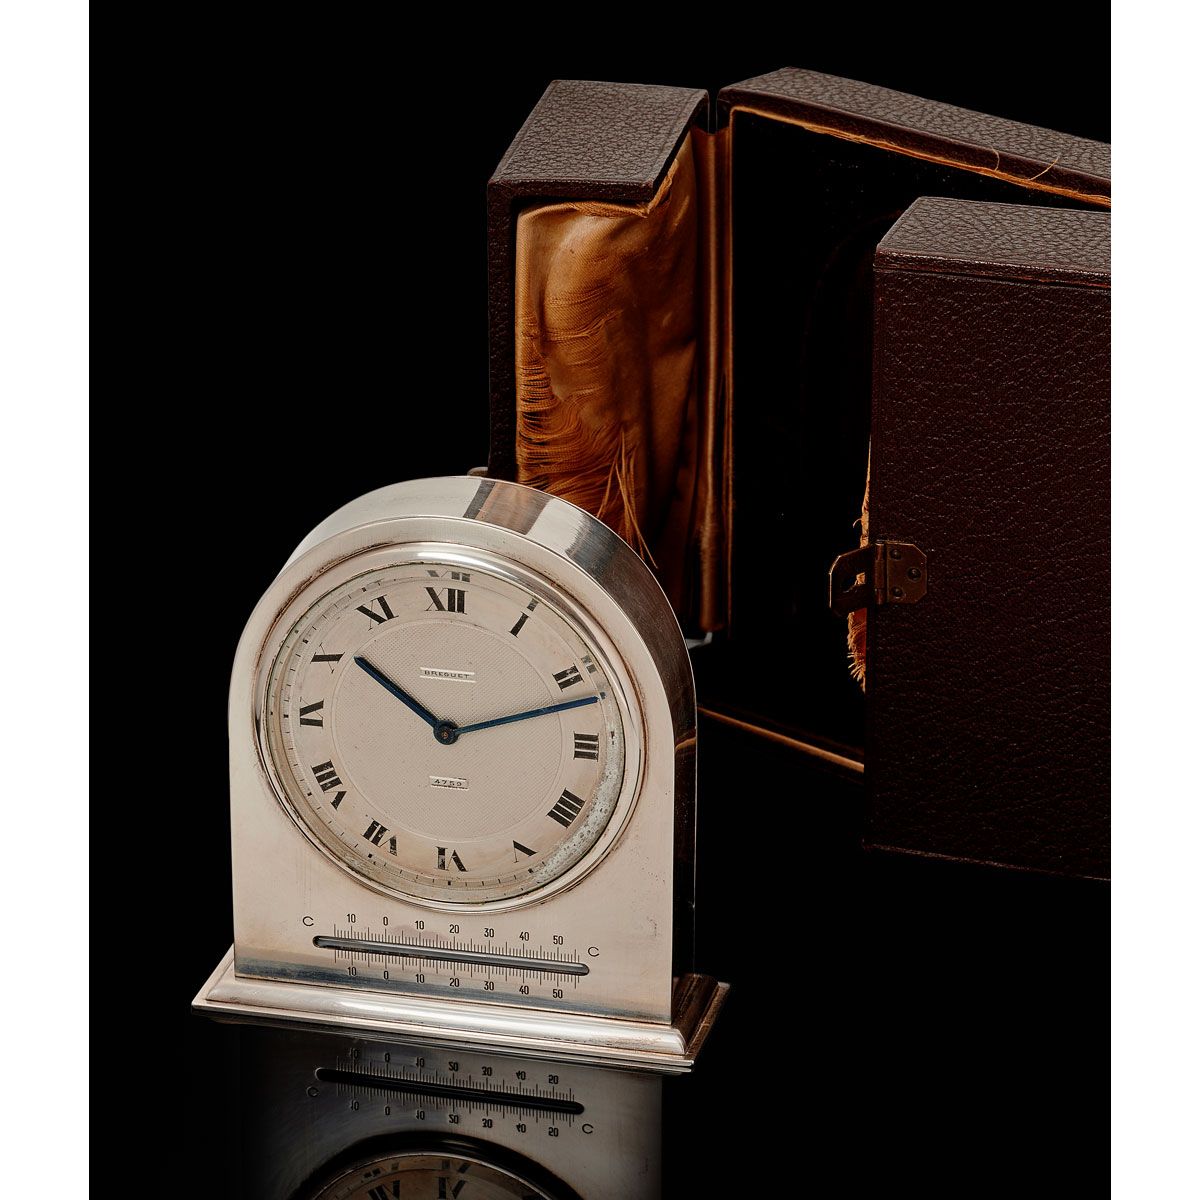 Null Breguet, orologio a pietra miliare, n. 4759, 1930 circa.

Raro orologio Art&hellip;